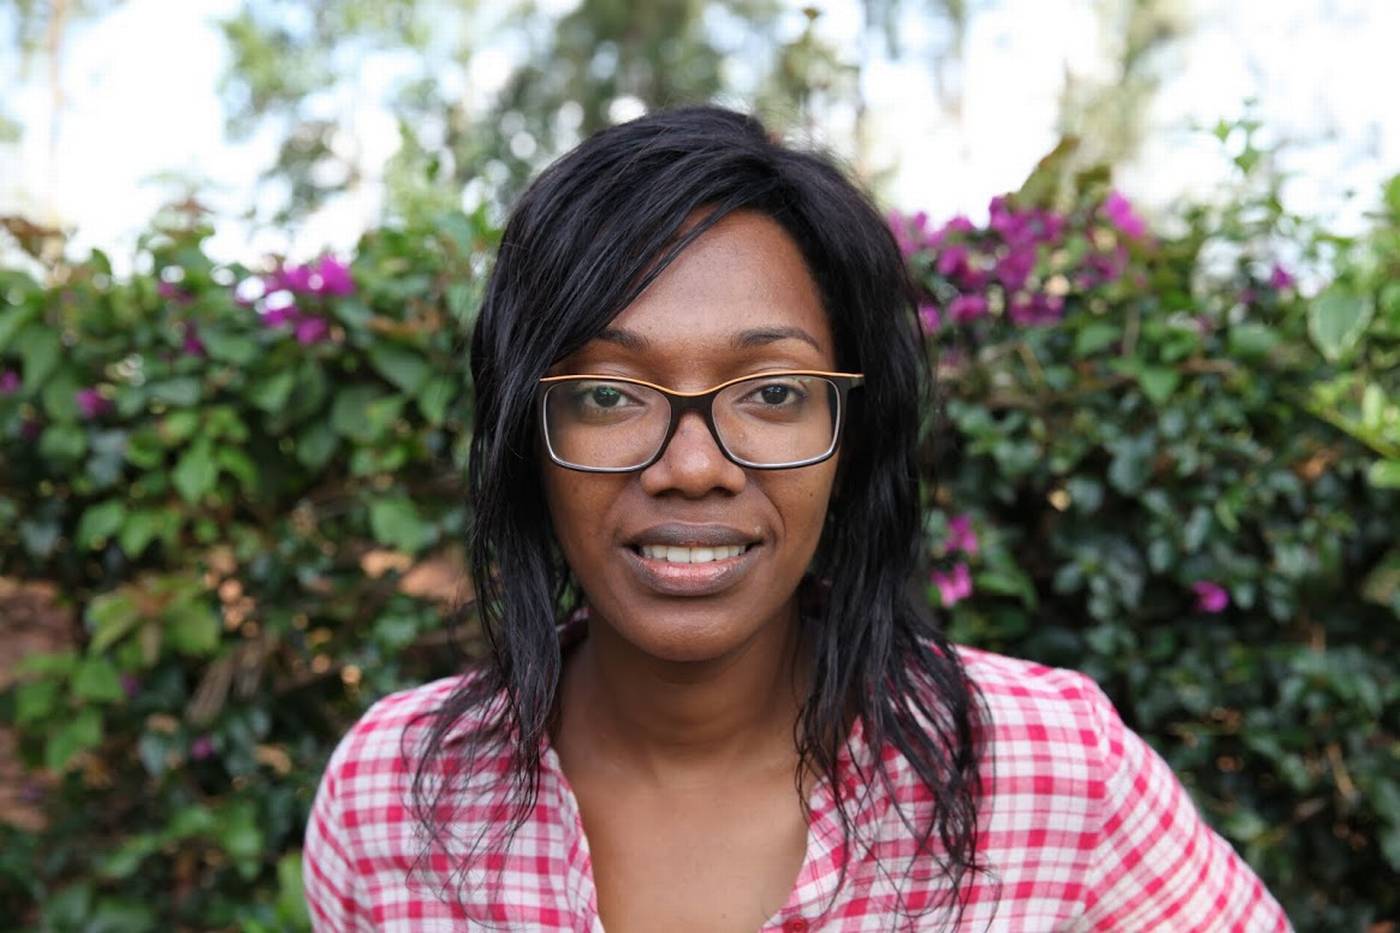 Shemale Sleeping Xxx Hd Videos - Kenya's transgender warrior: from suicide bid to celebrity